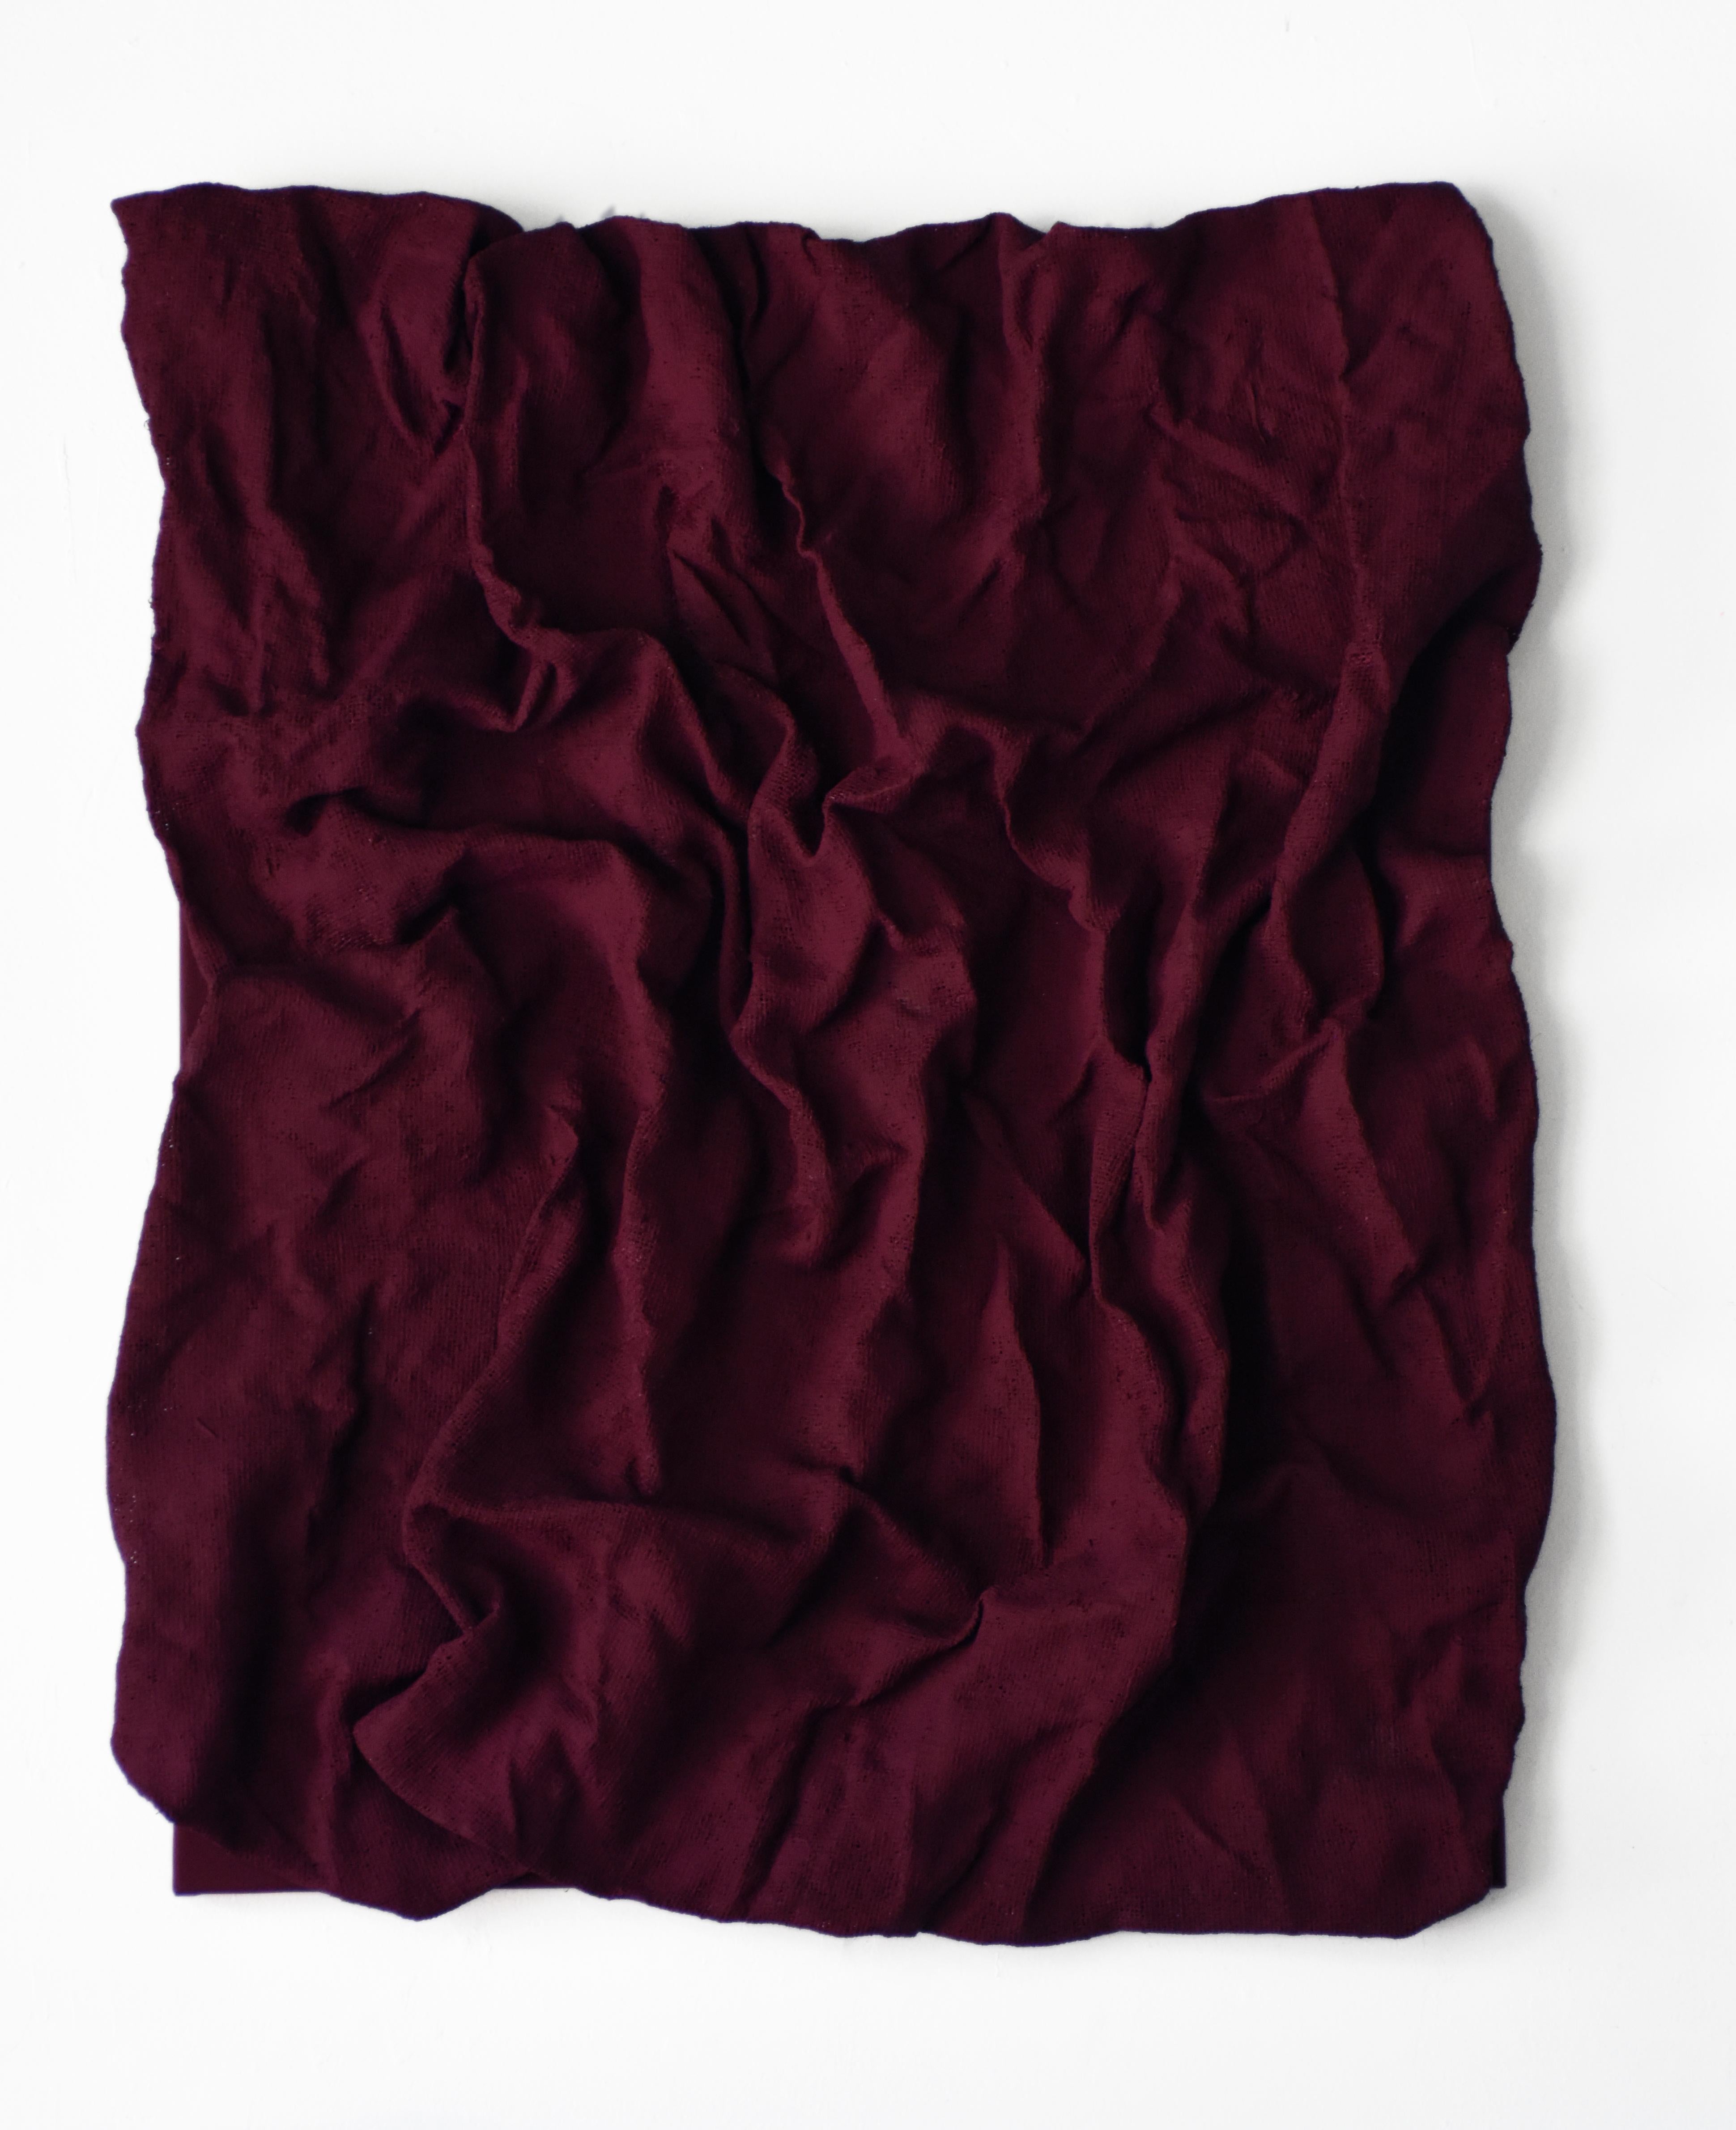 Chloe Hedden Abstract Sculpture - Rasberry Dream Folds (hardened fabric, contemporary art design, wall sculpture)